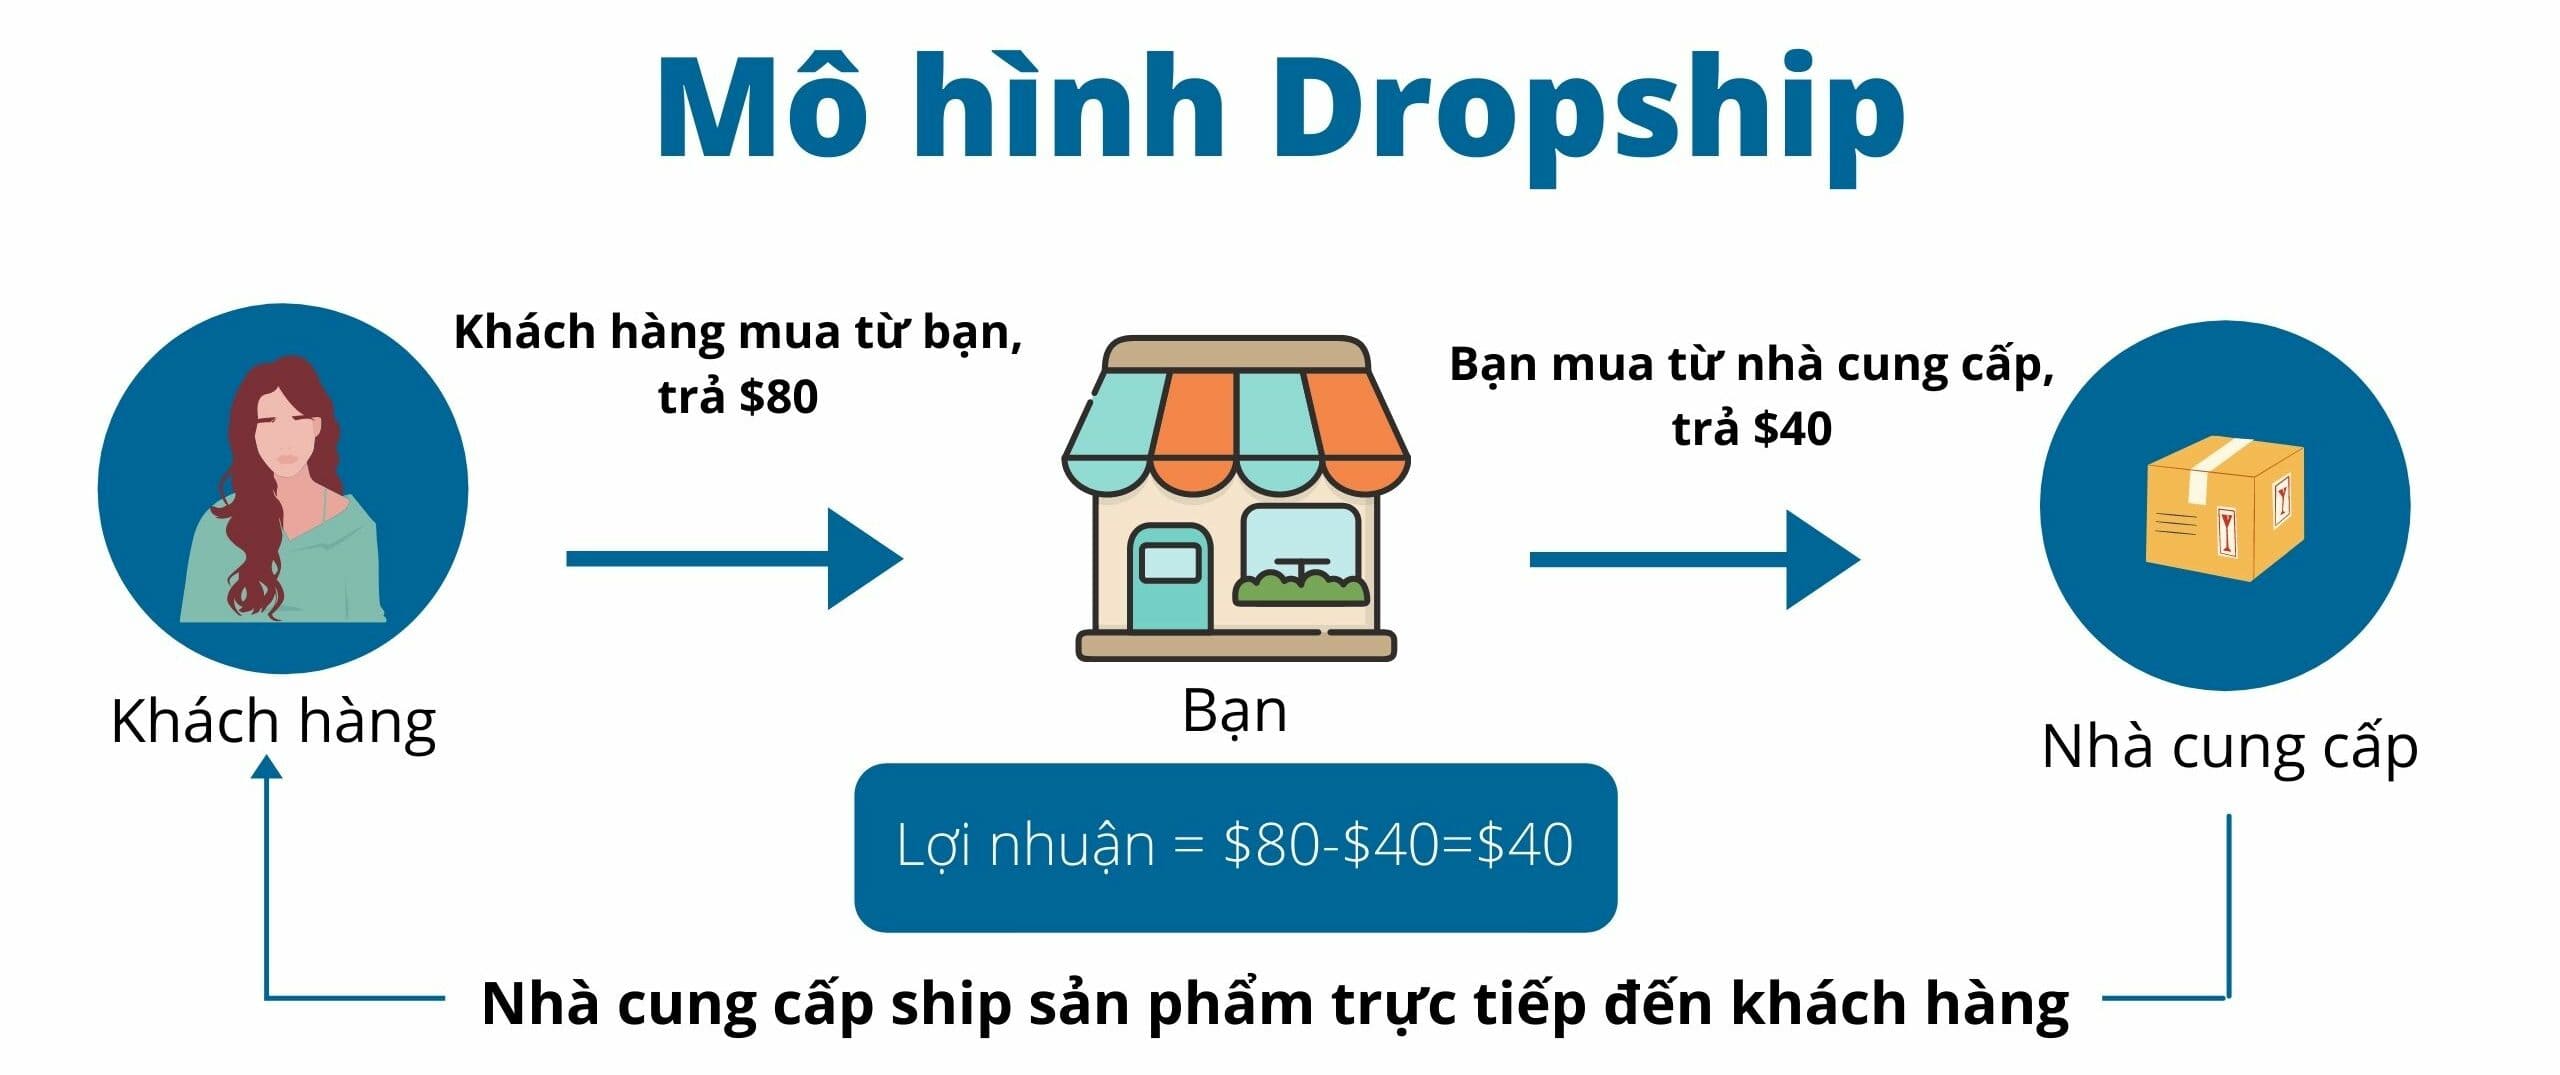 Cách kinh doanh Dropshipping 